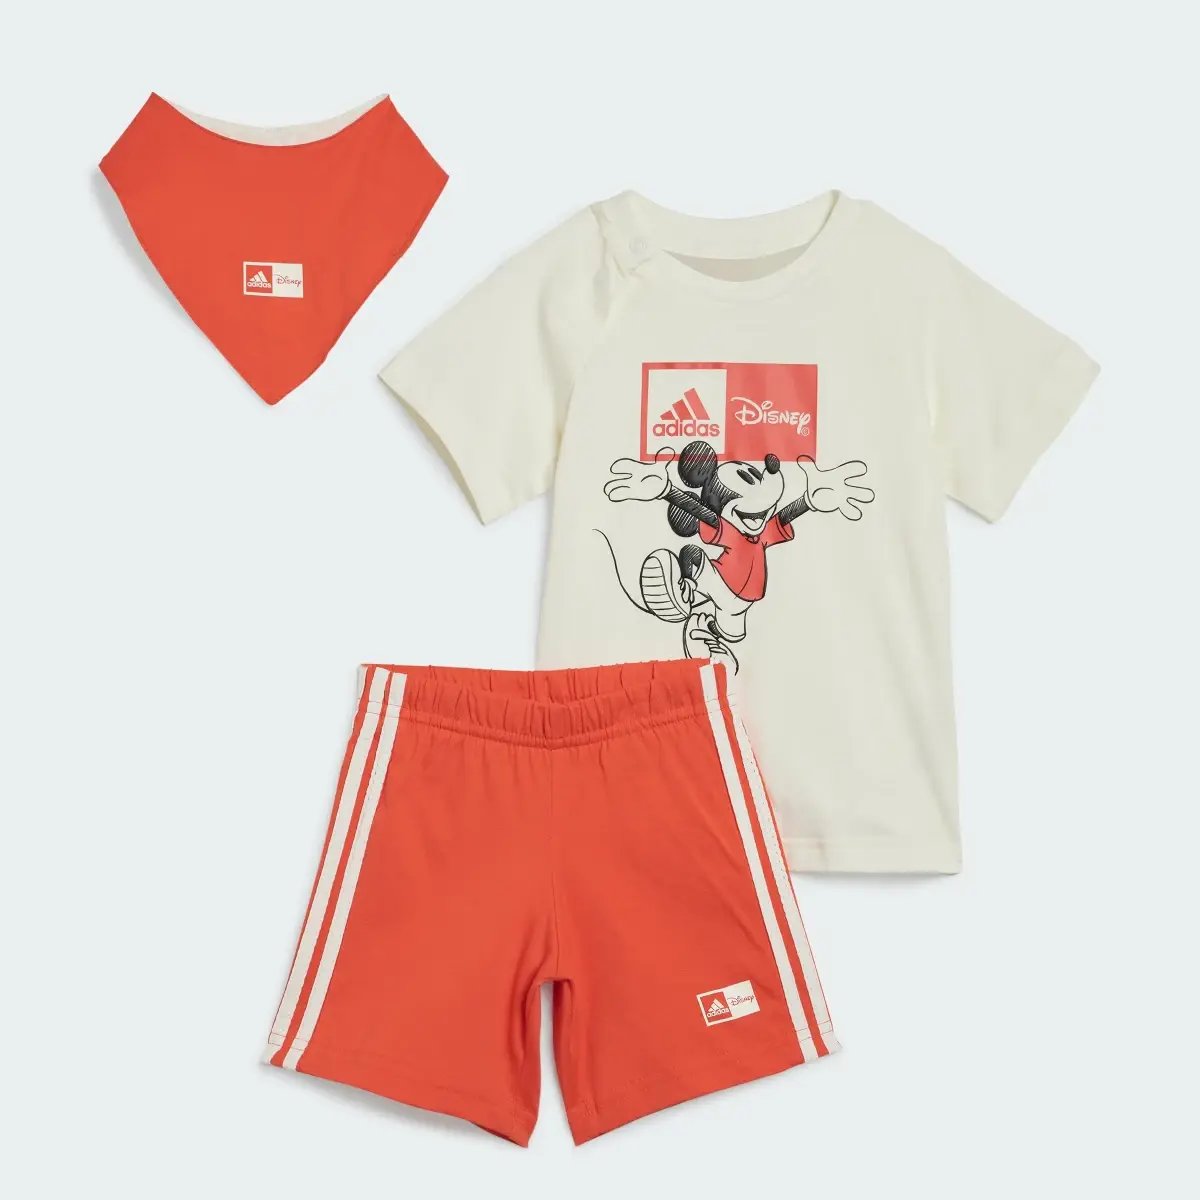 Adidas x Disney Mickey Mouse Gift Set. 1